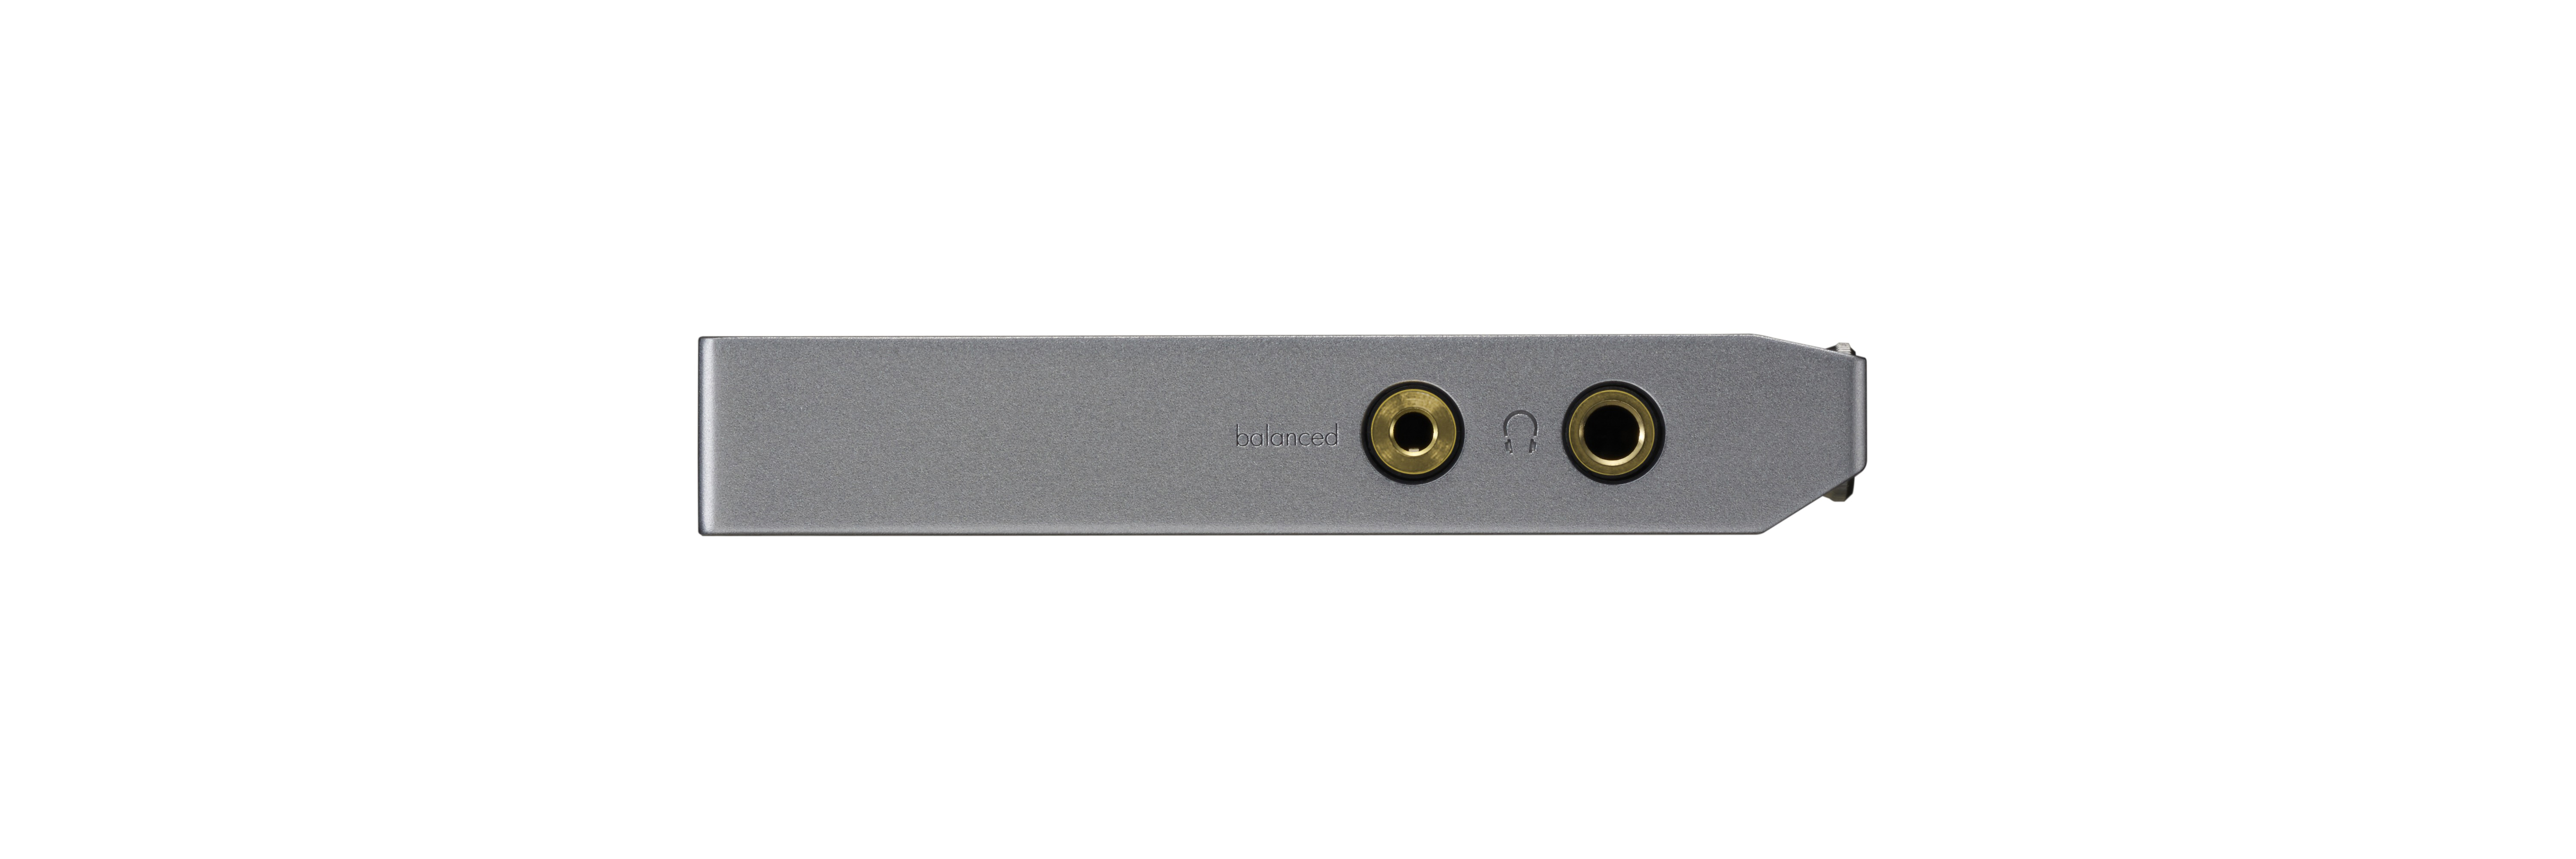 Audioplayer PIONEER GB, XDP-300R-B Schwarz 32